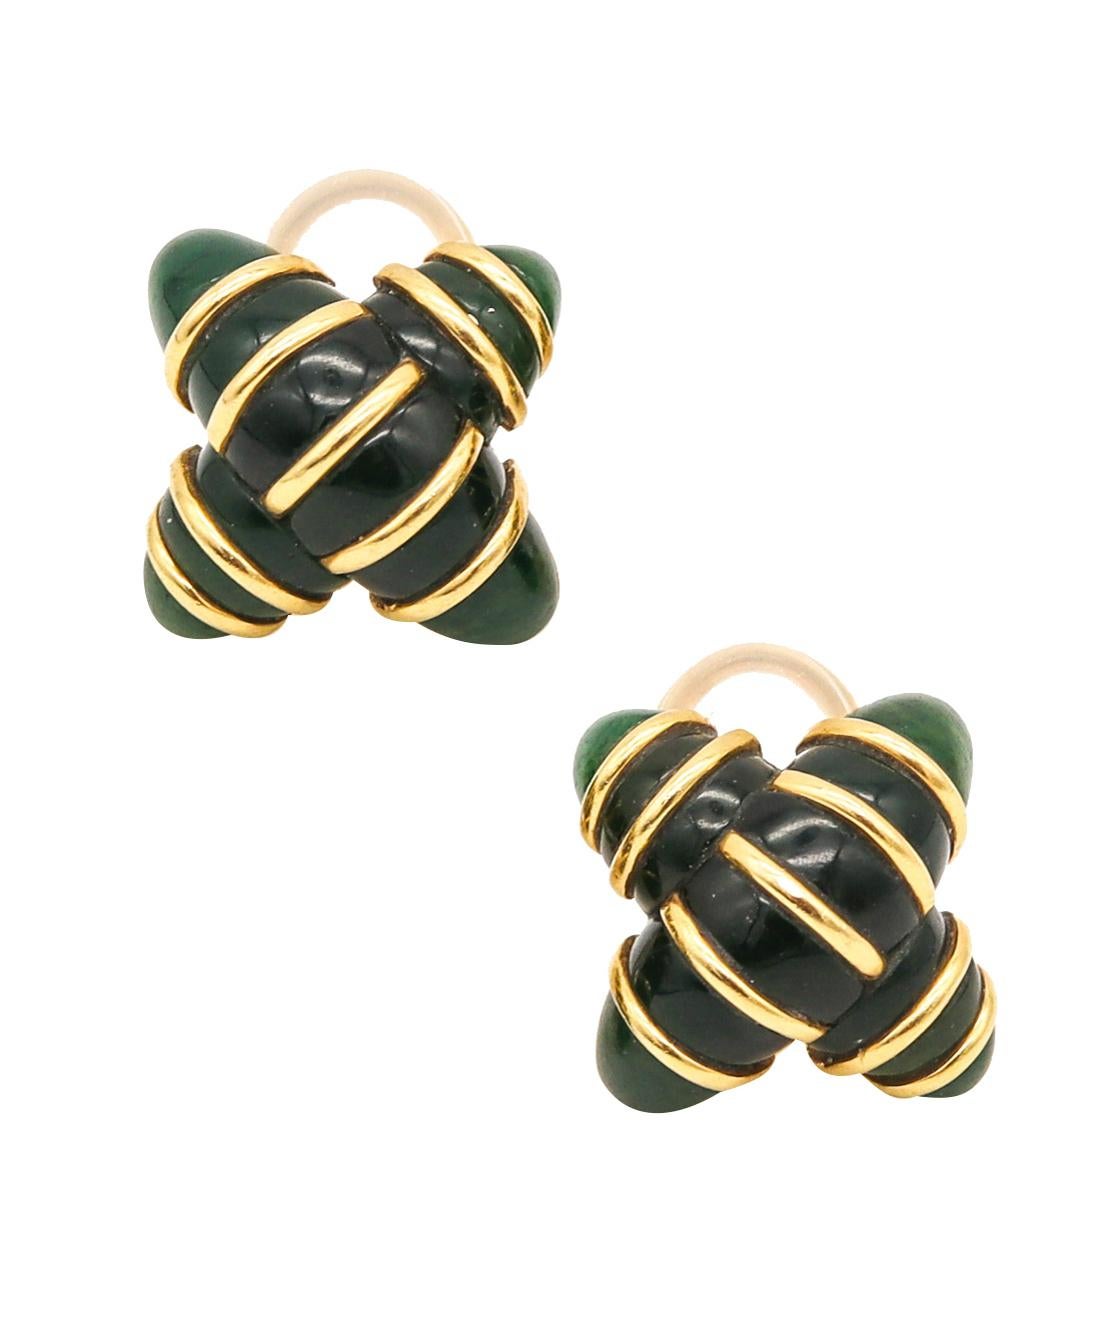 Angela Cummings Studios Criss Cross Clip Earrings in 18kt Gold with Green Jade